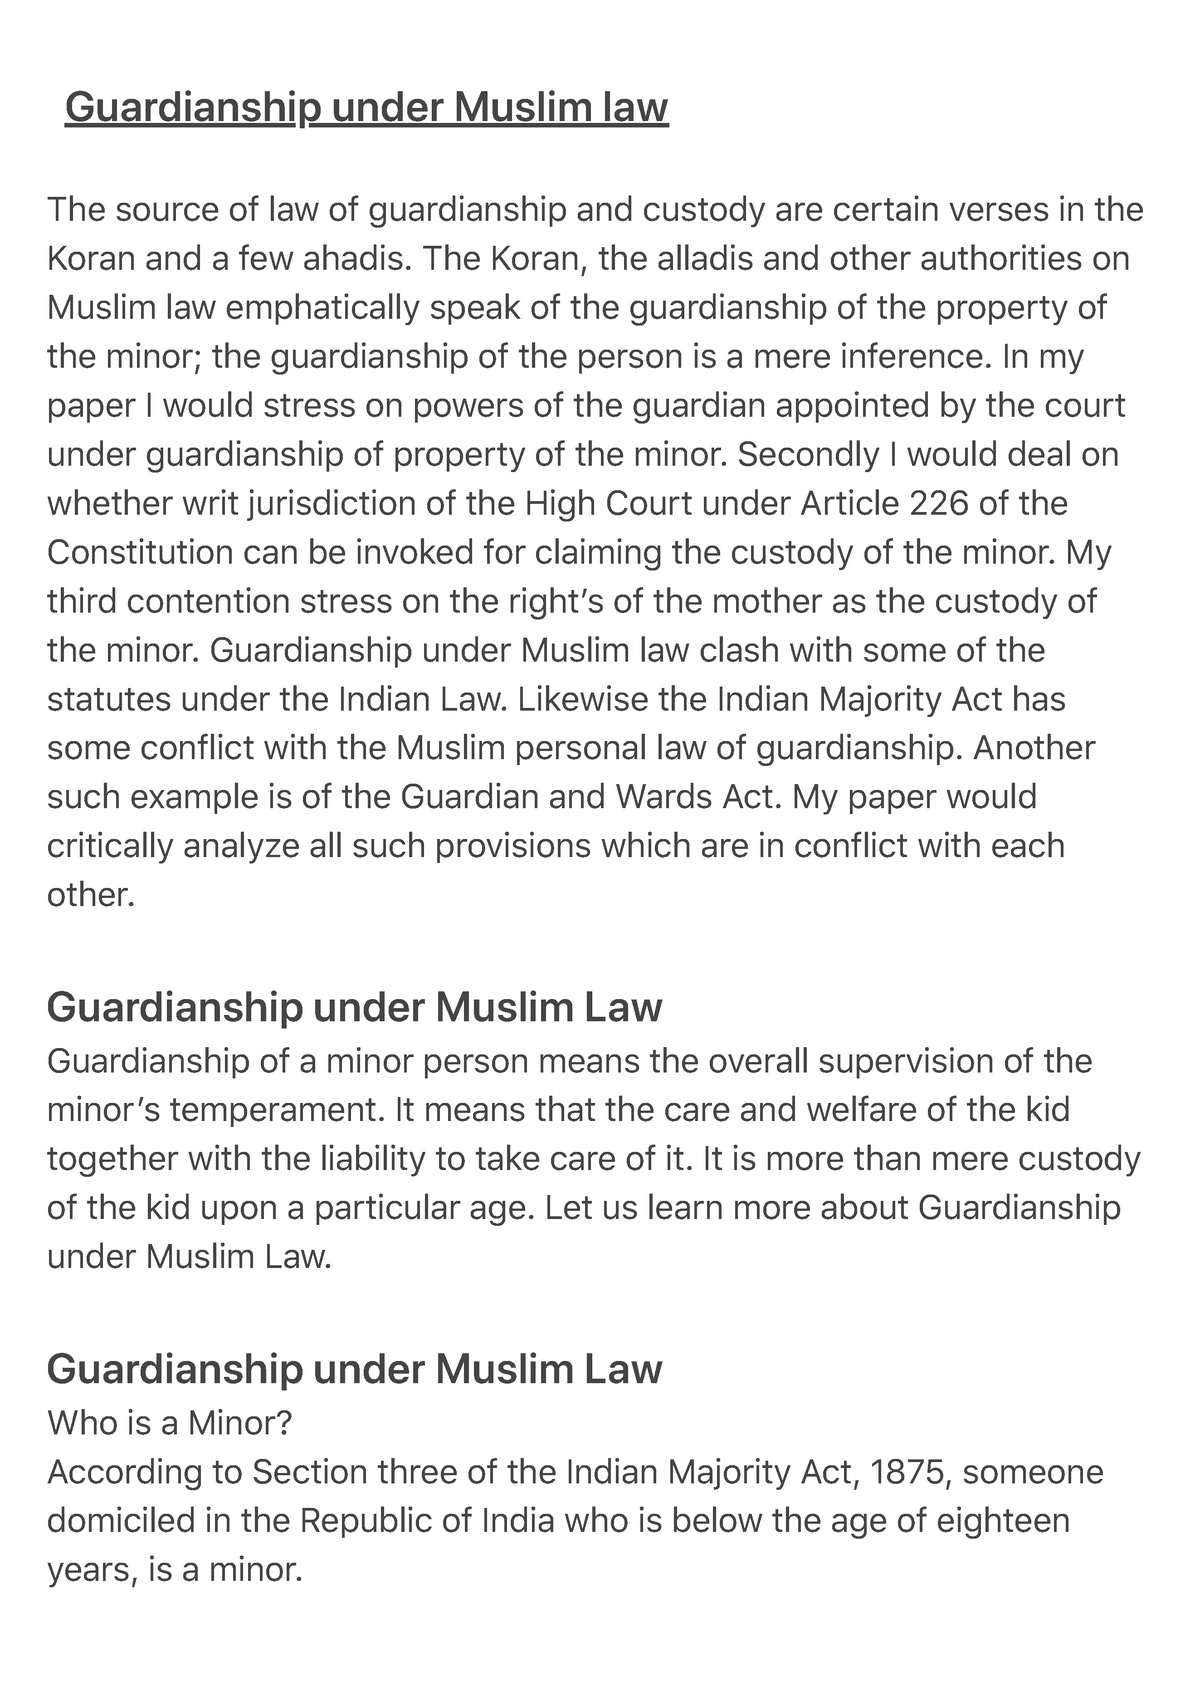 guardianship under muslim law research paper